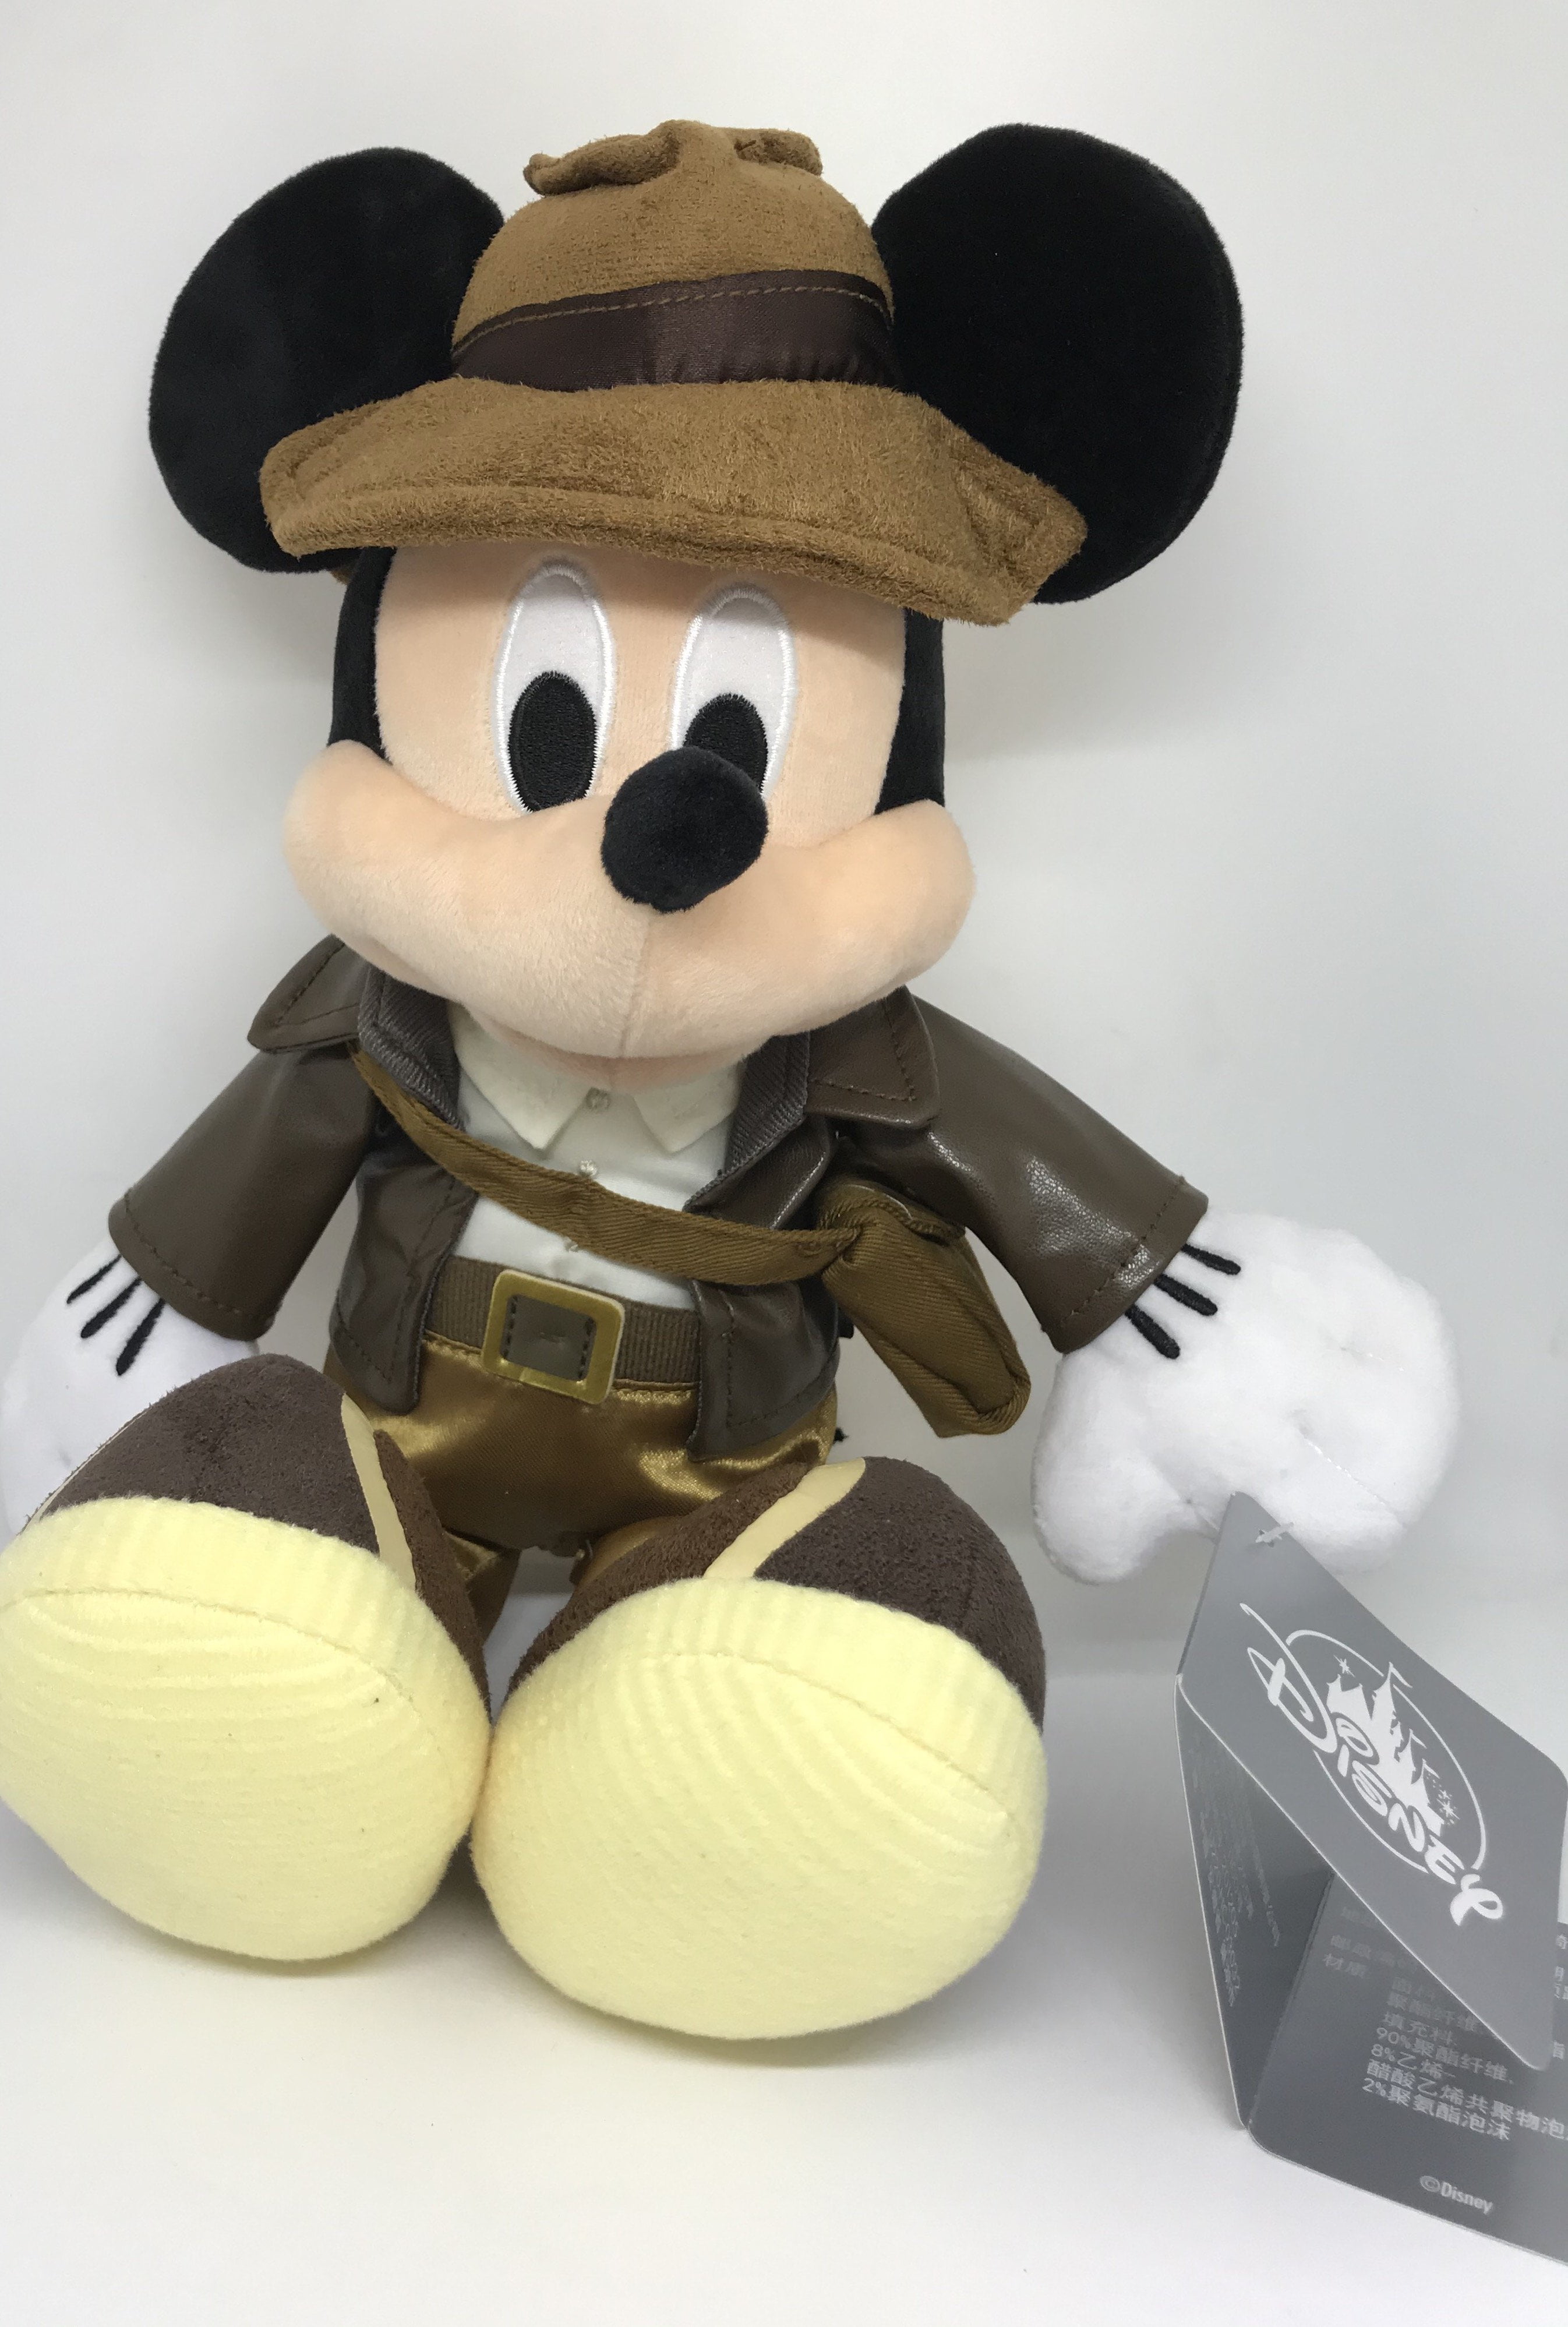 Disney Parks 11" Mickey Mouse As Indiana Jones Plush Toy New With Tag - Walmart.com - Walmart.com